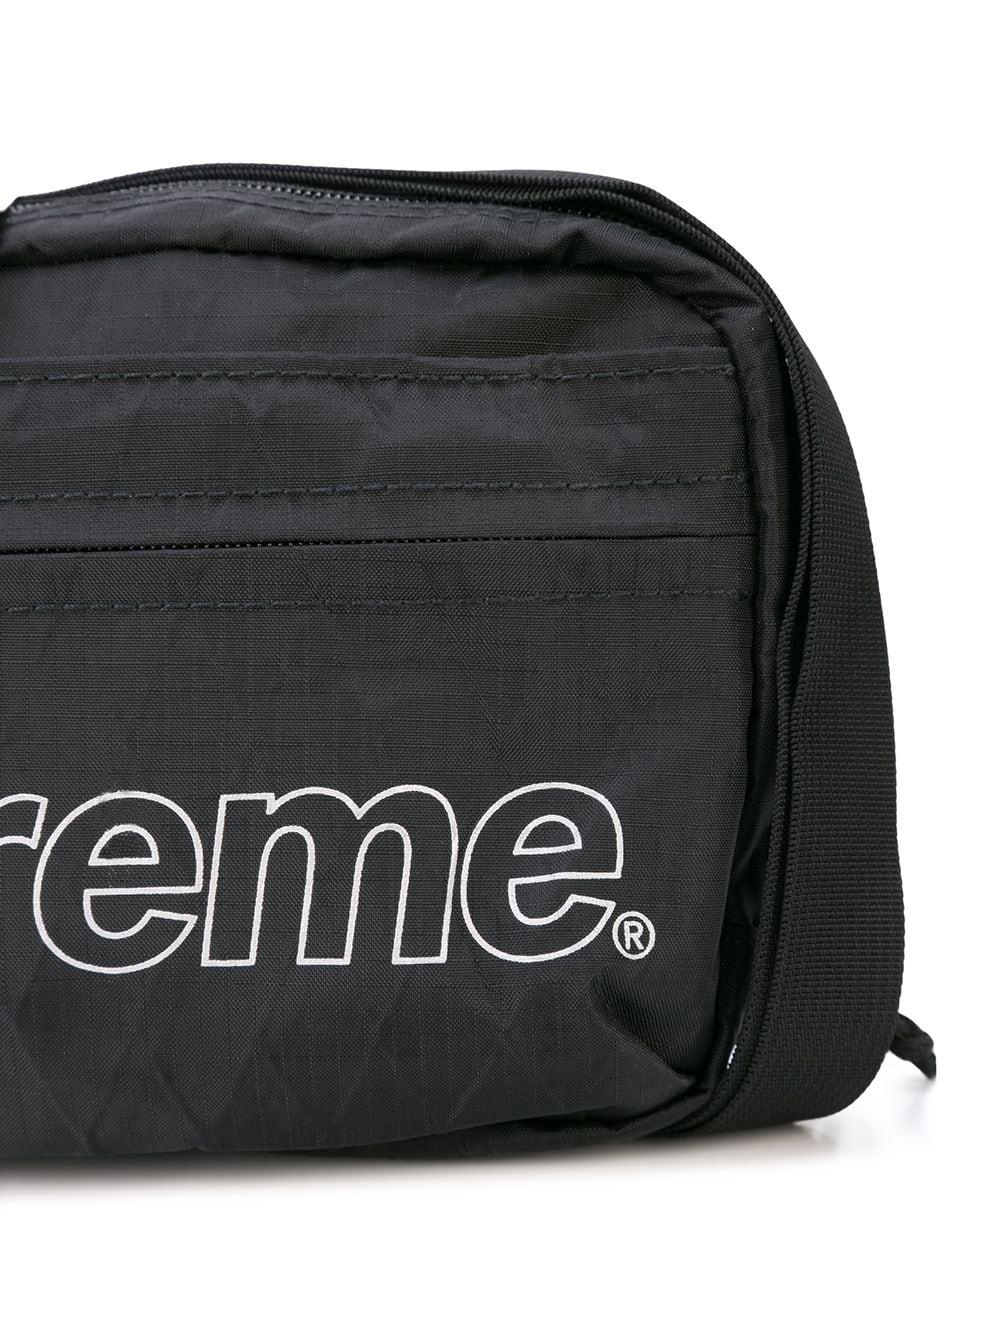 Supreme logo-patch Shoulder Bag - Farfetch